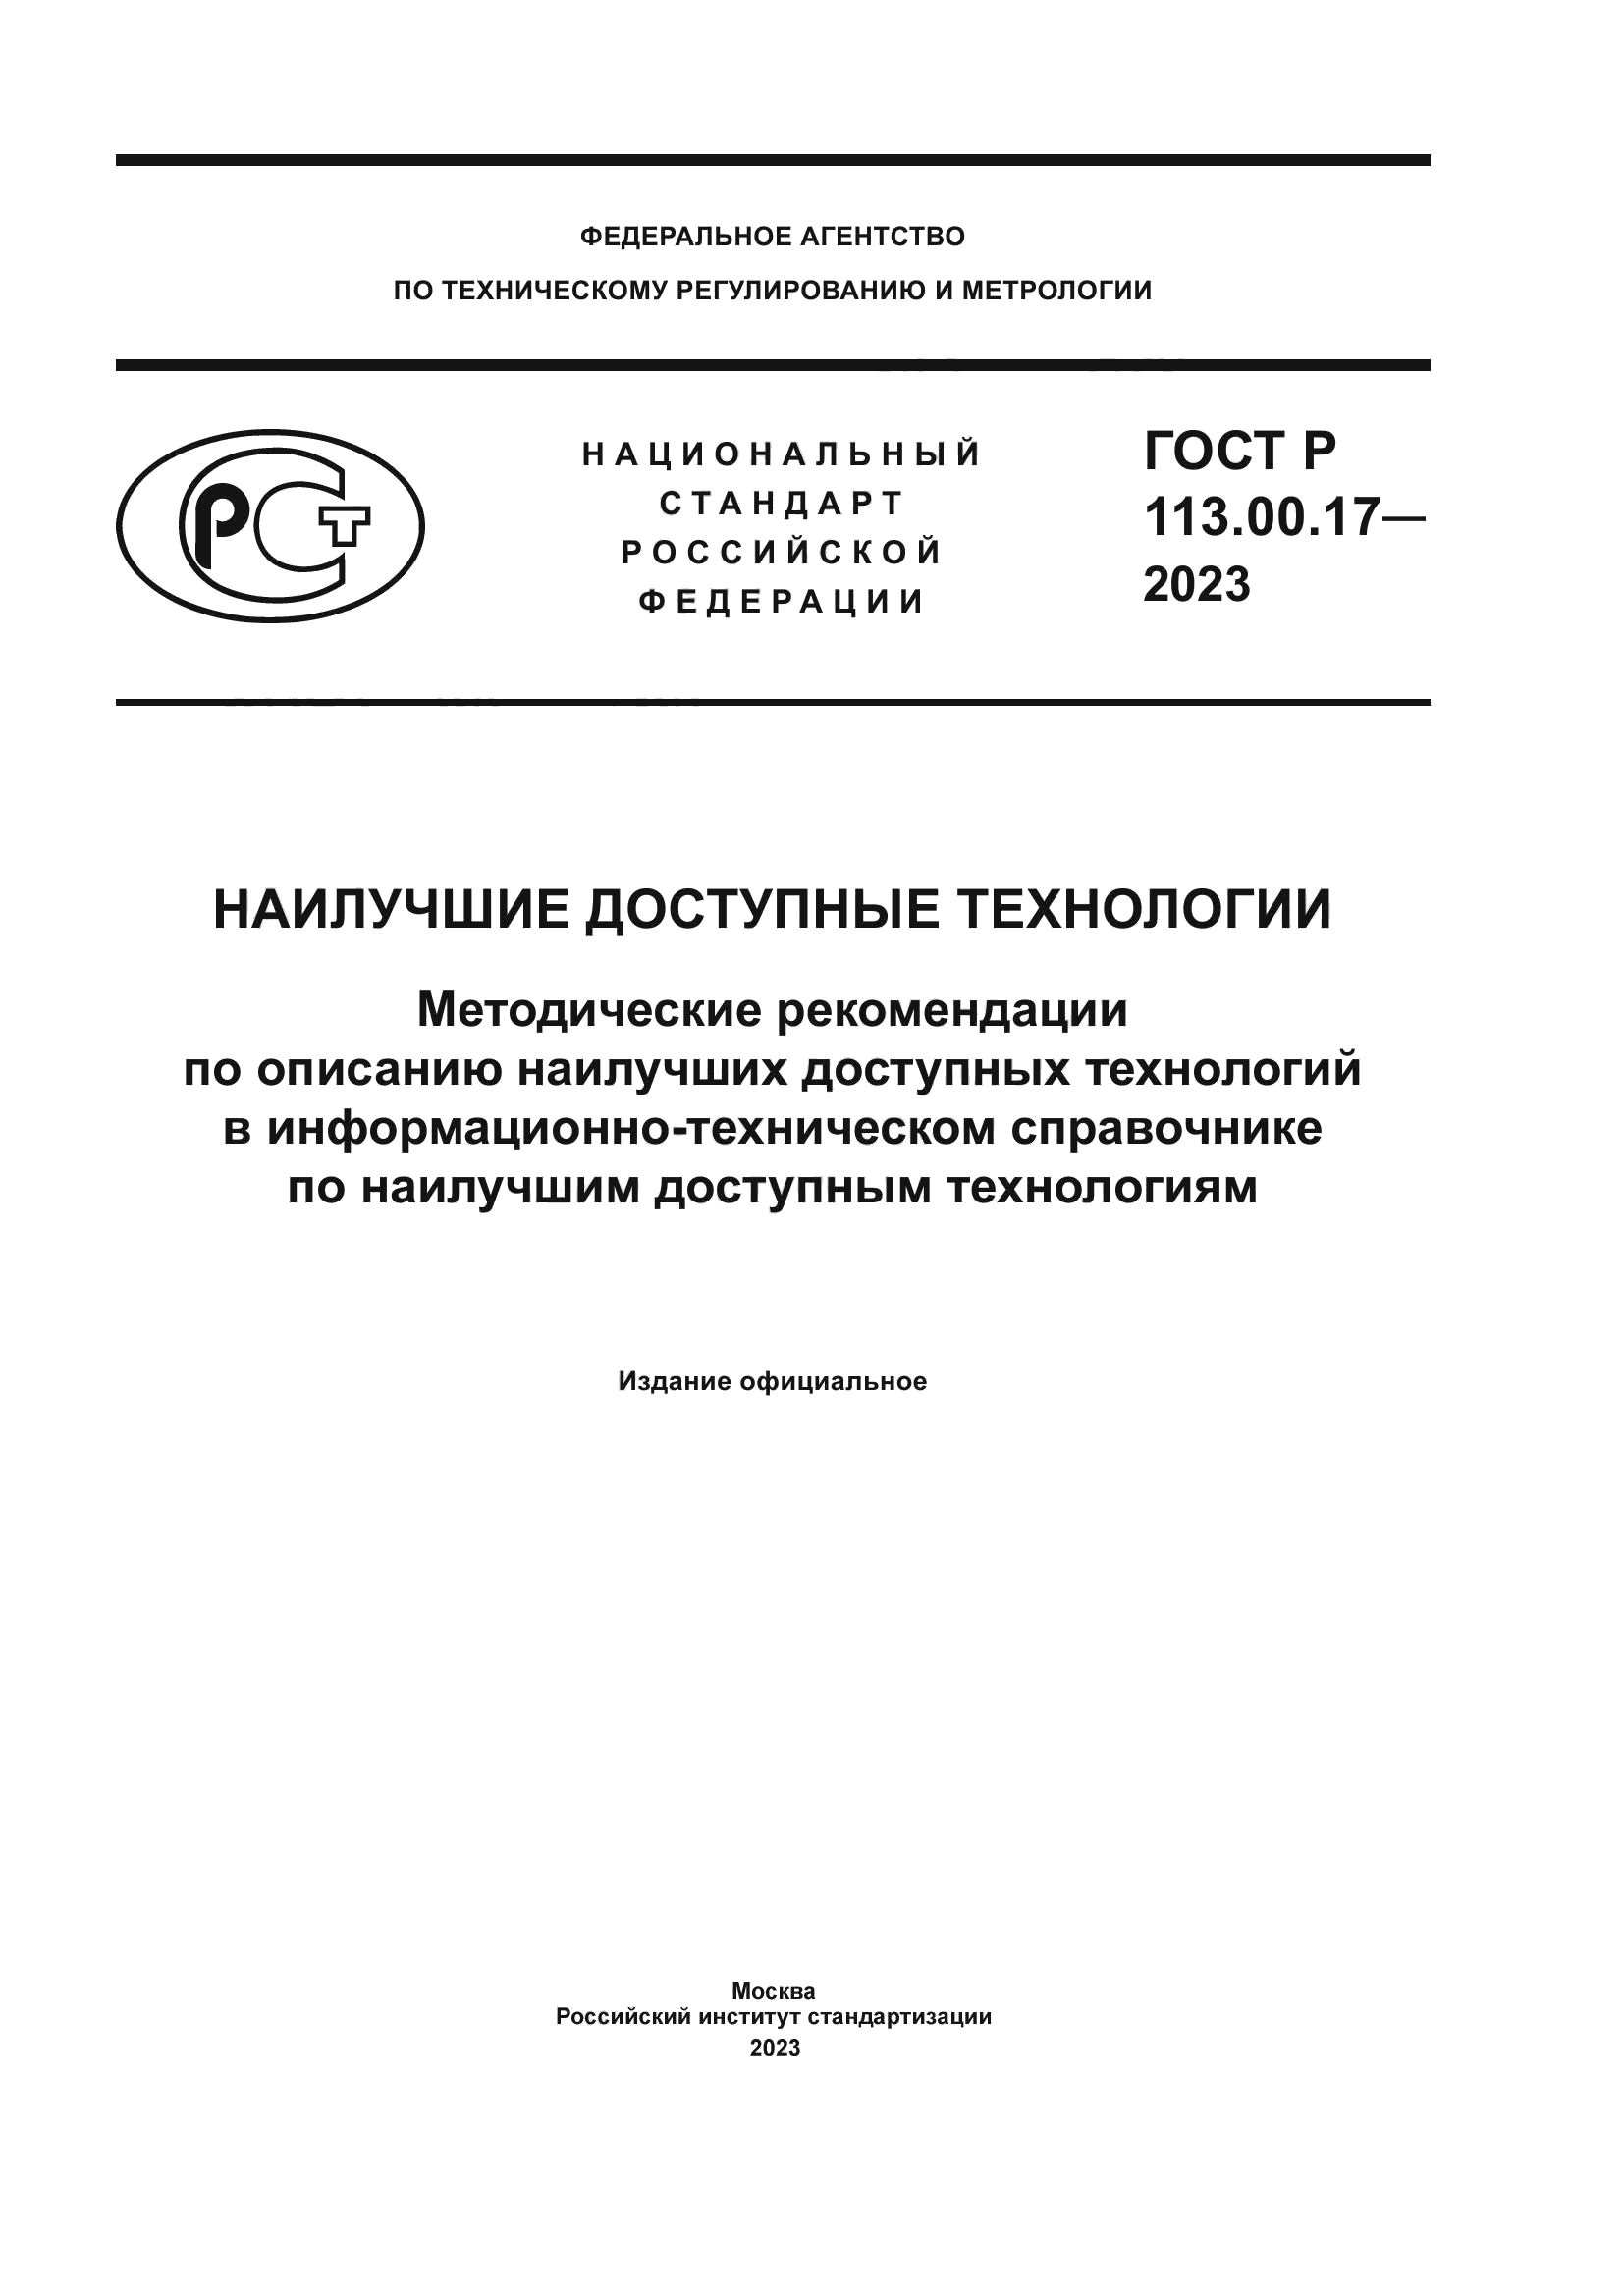 ГОСТ Р 113.00.17-2023